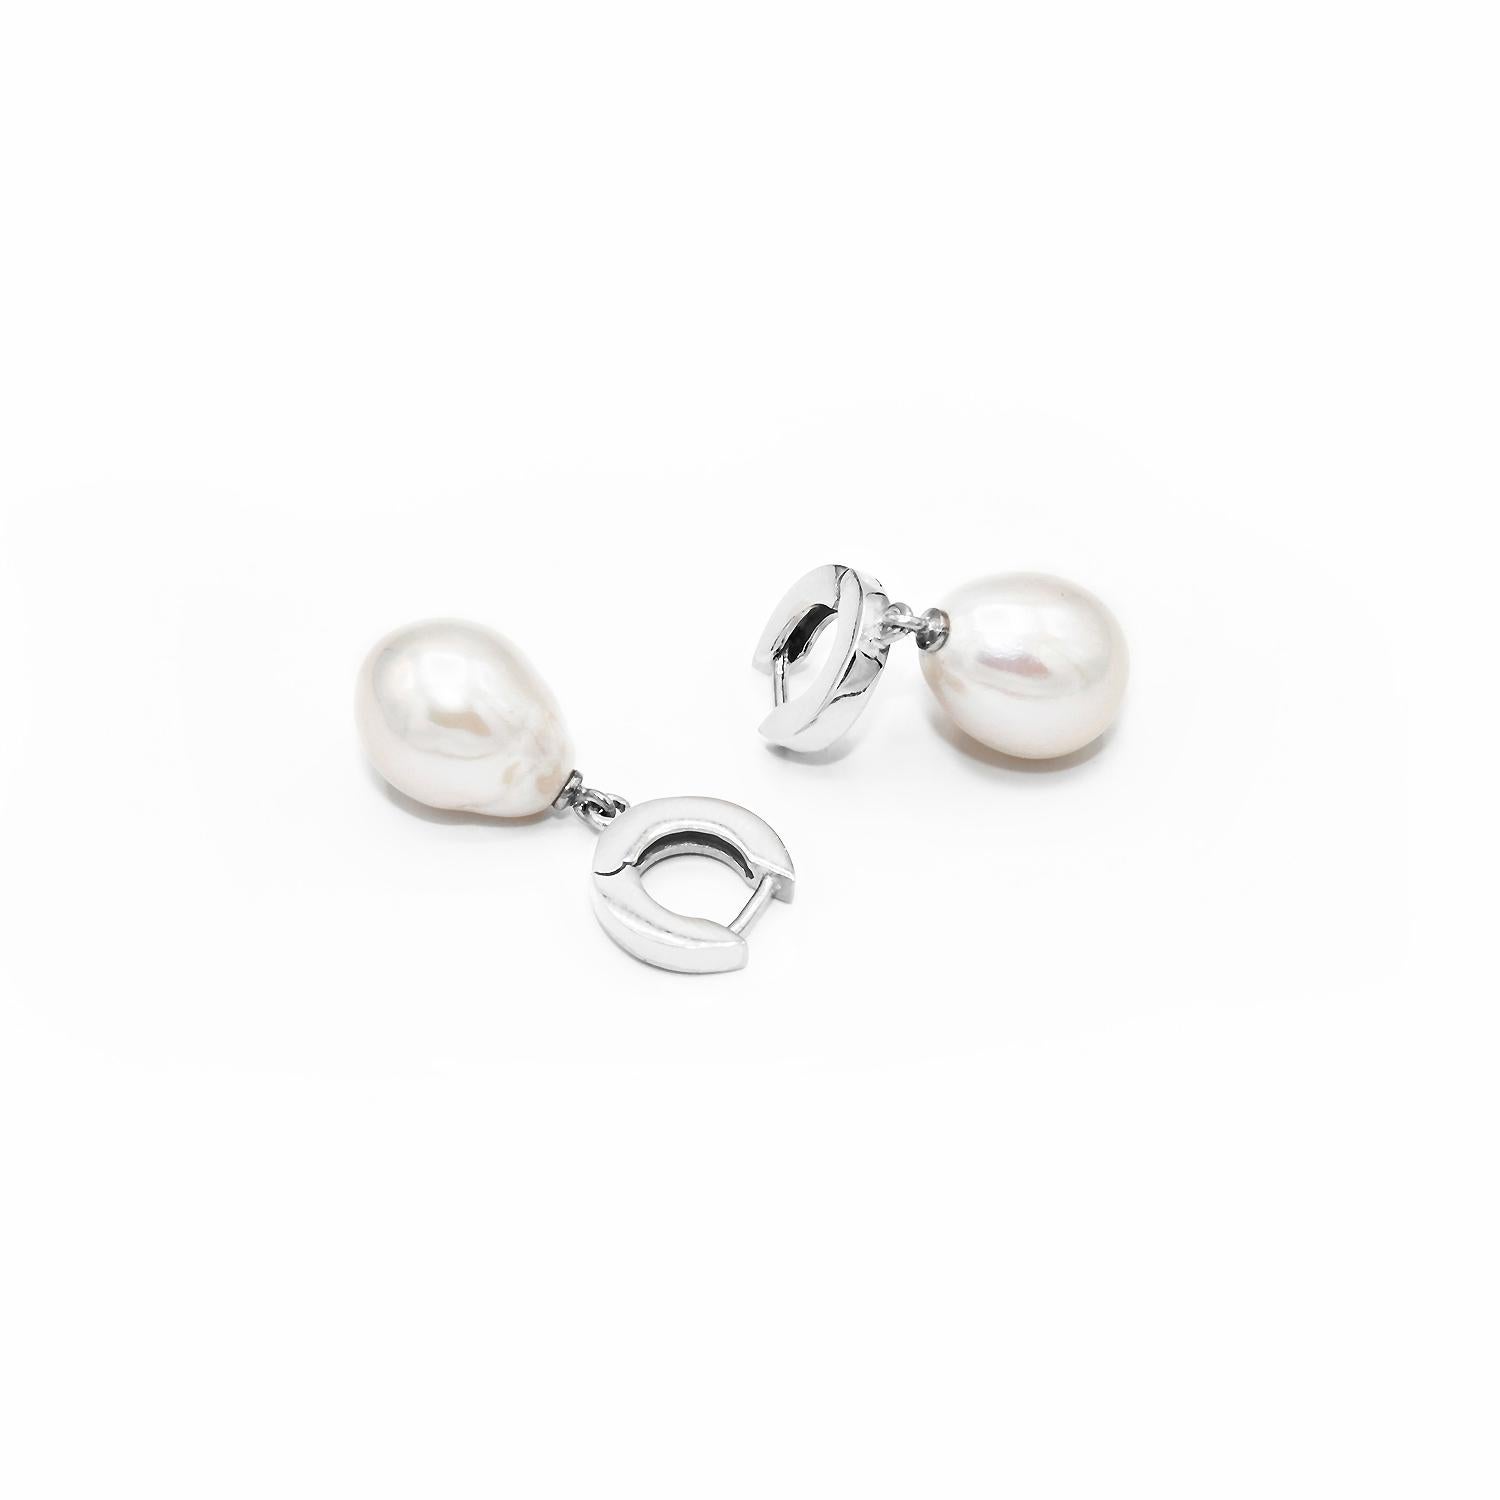 A very elegant pair of earrings in white pearls and 925 white silver.
White Silver g. 4
Baroque white pearls - pear shape